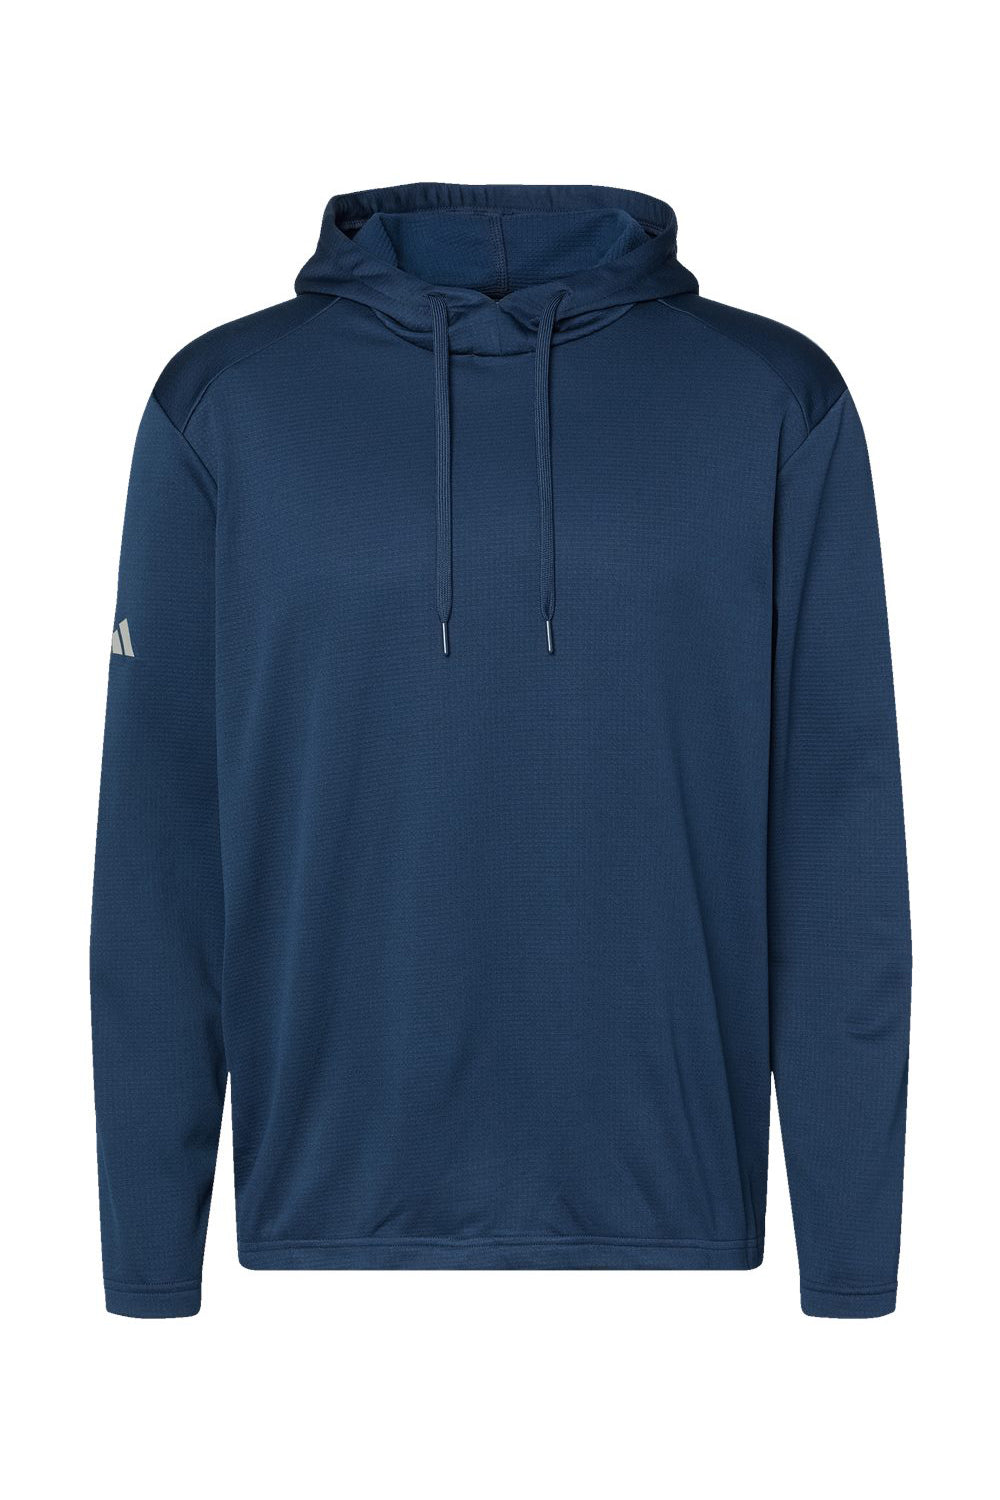 Adidas A530 Mens Textured Mixed Media Hooded Sweatshirt Hoodie Collegiate Navy Blue Flat Front